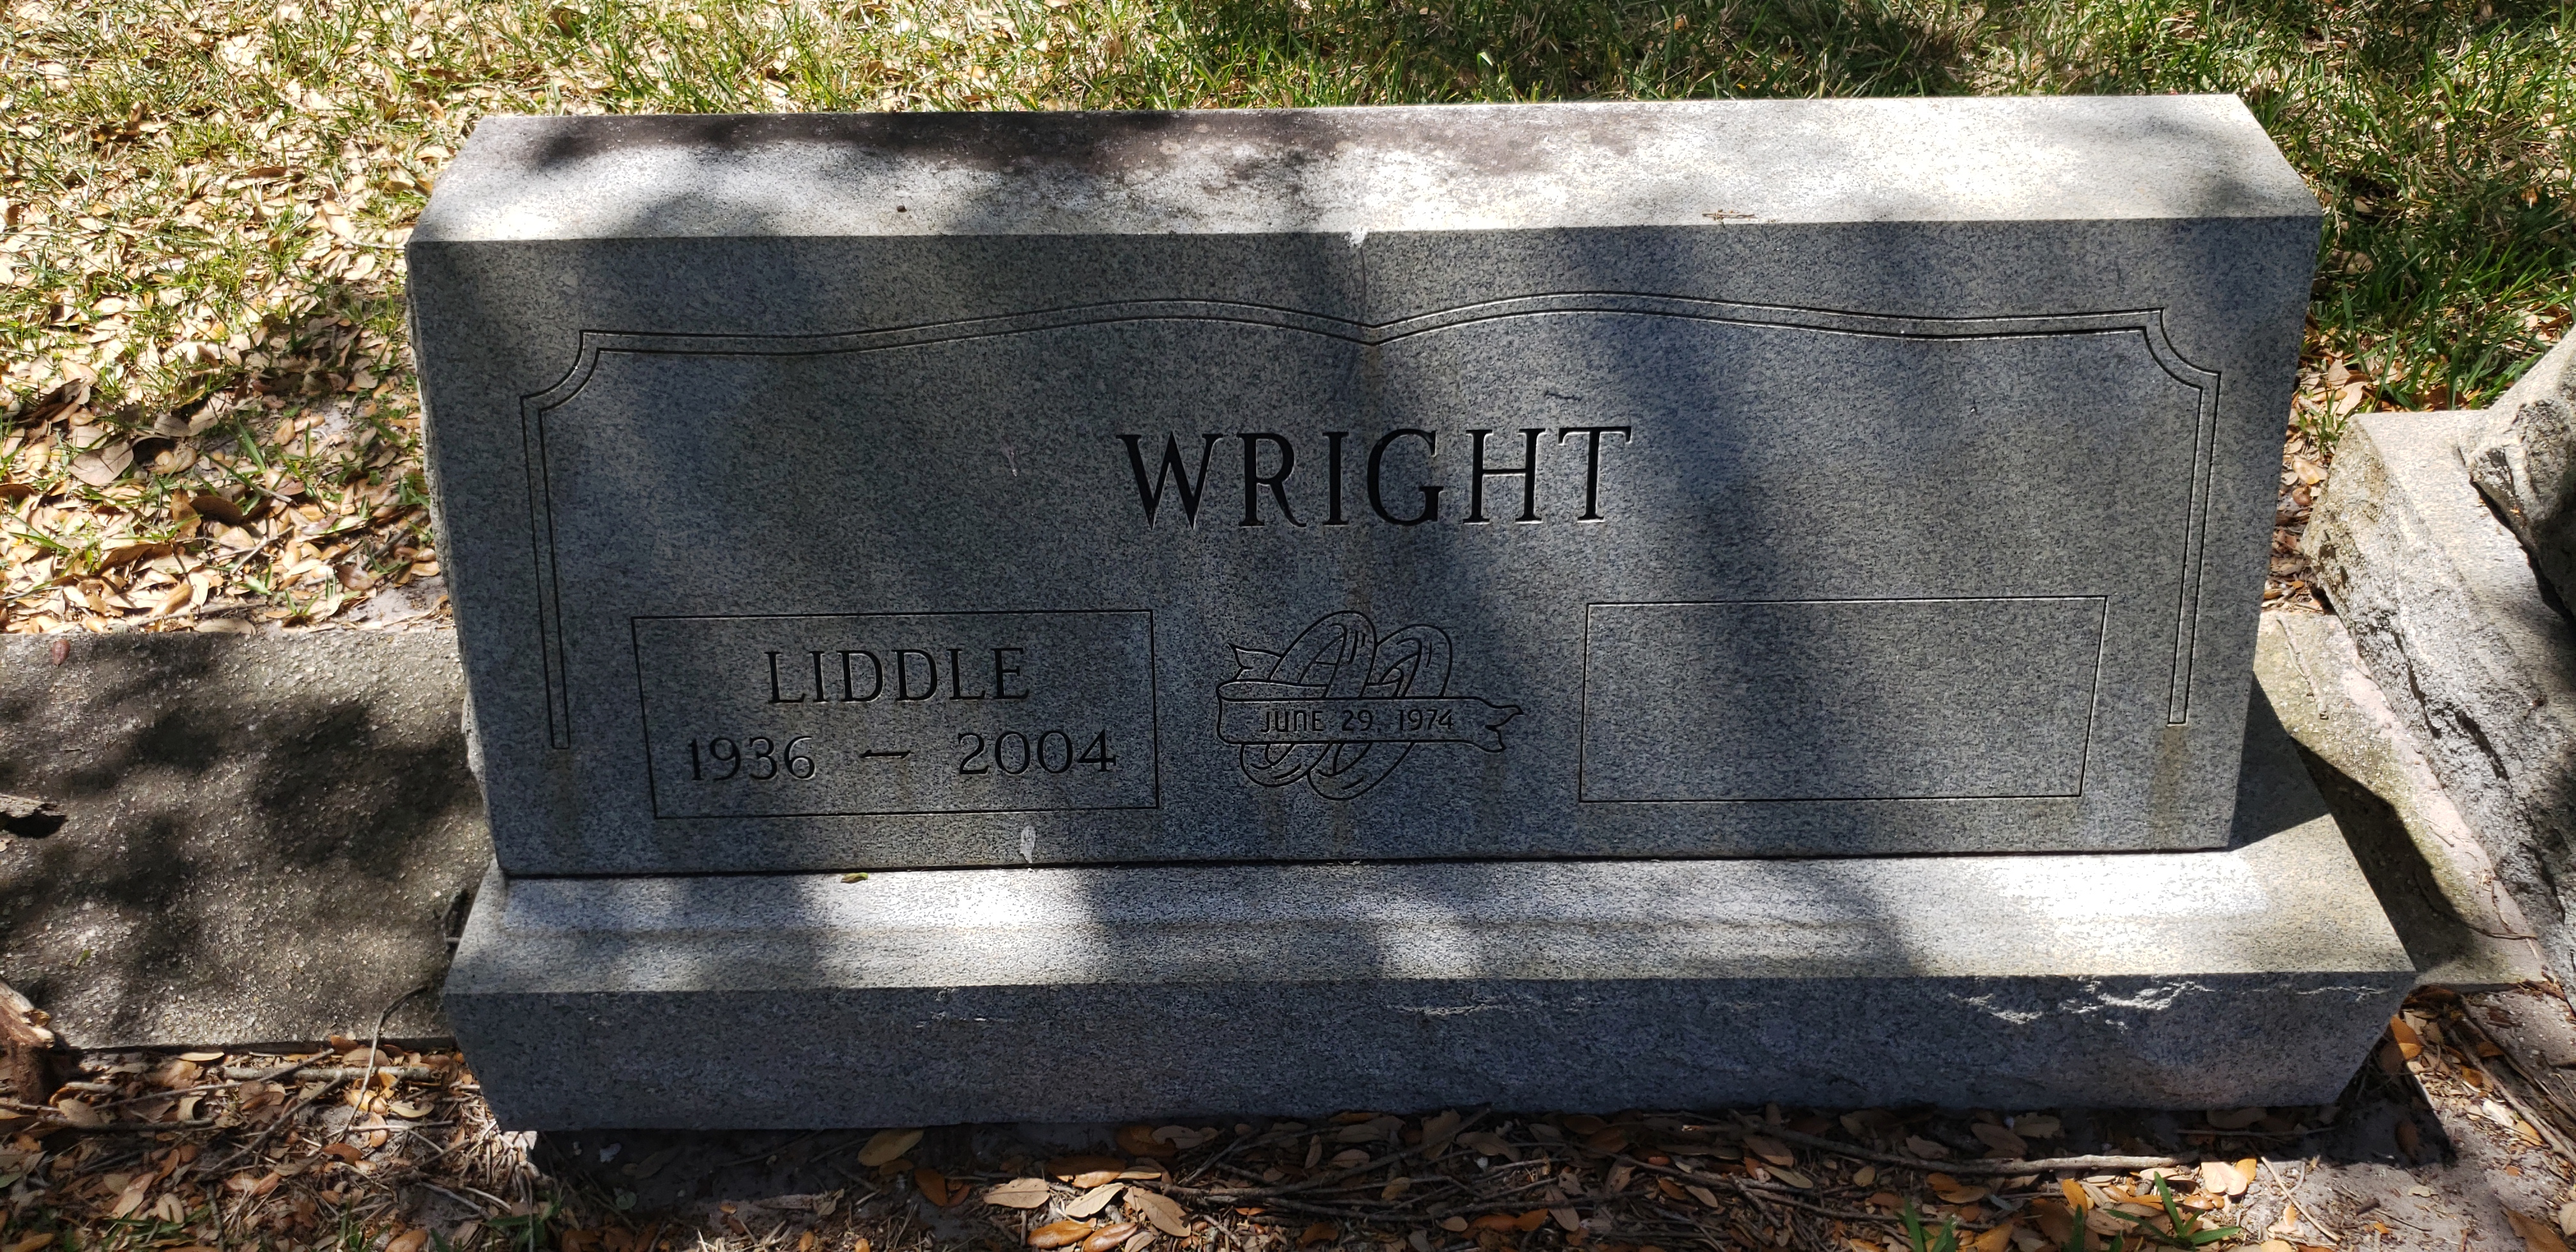 Liddle Wright